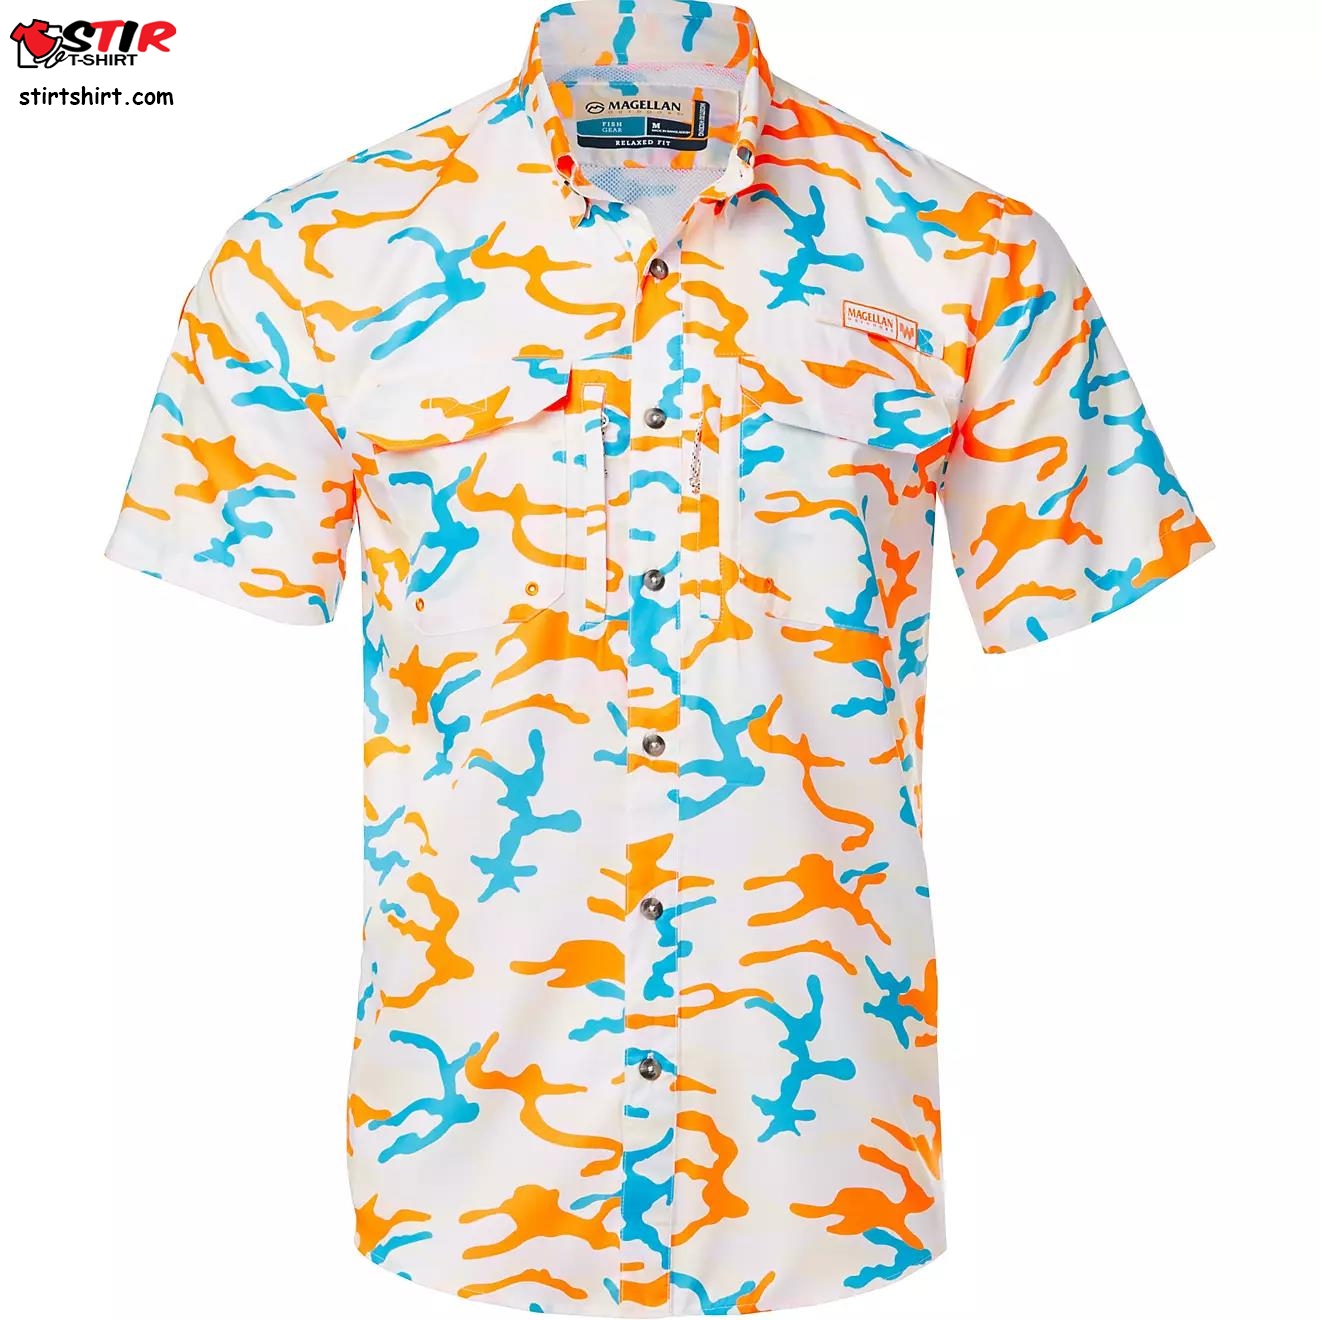 Whataburger Hawaiian Shirt - Best Hawaiian Shirts for Men and Women ...